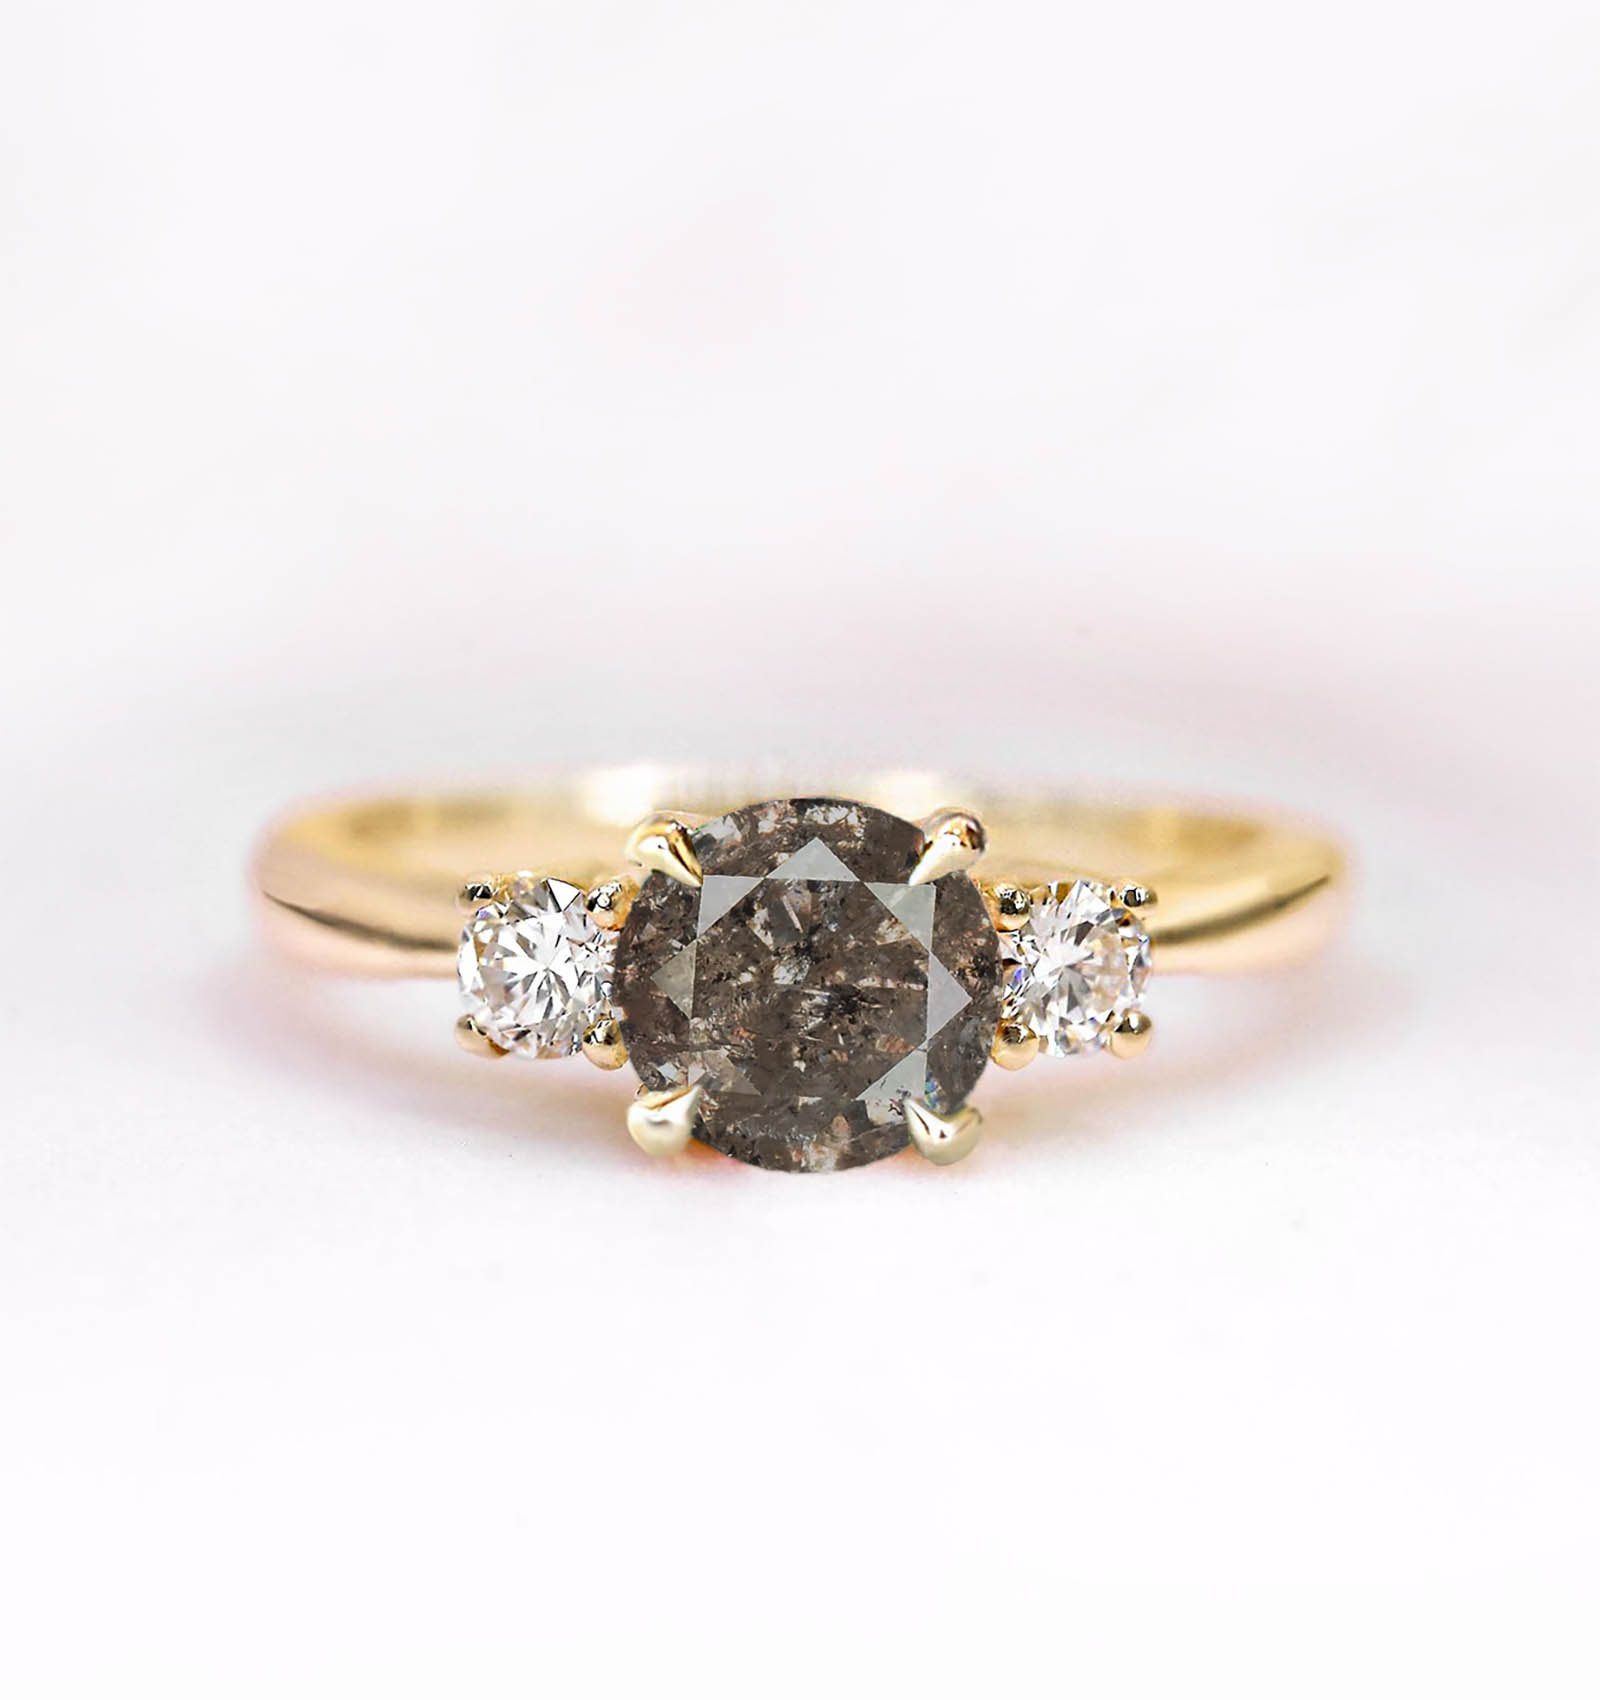 6mm Gray Diamond Ring in Yellow Gold - DIORAH JEWELLERS